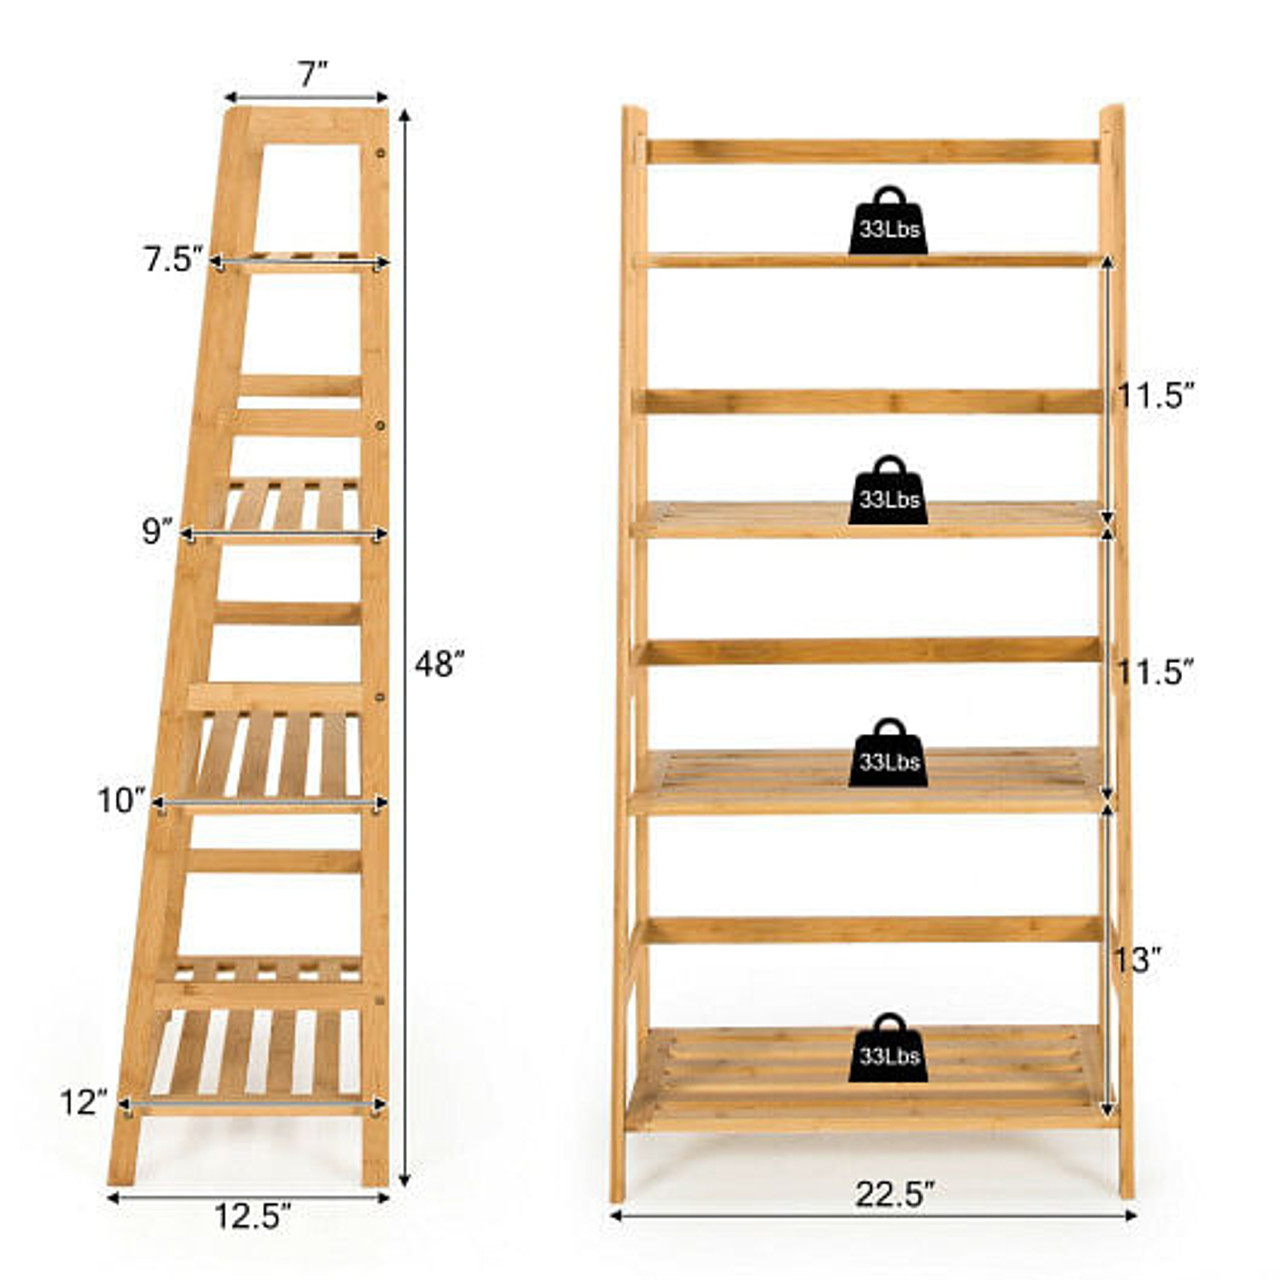 4-Tier Bamboo Bookshelf Ladder Shelf Plant Stand Rack-Natural